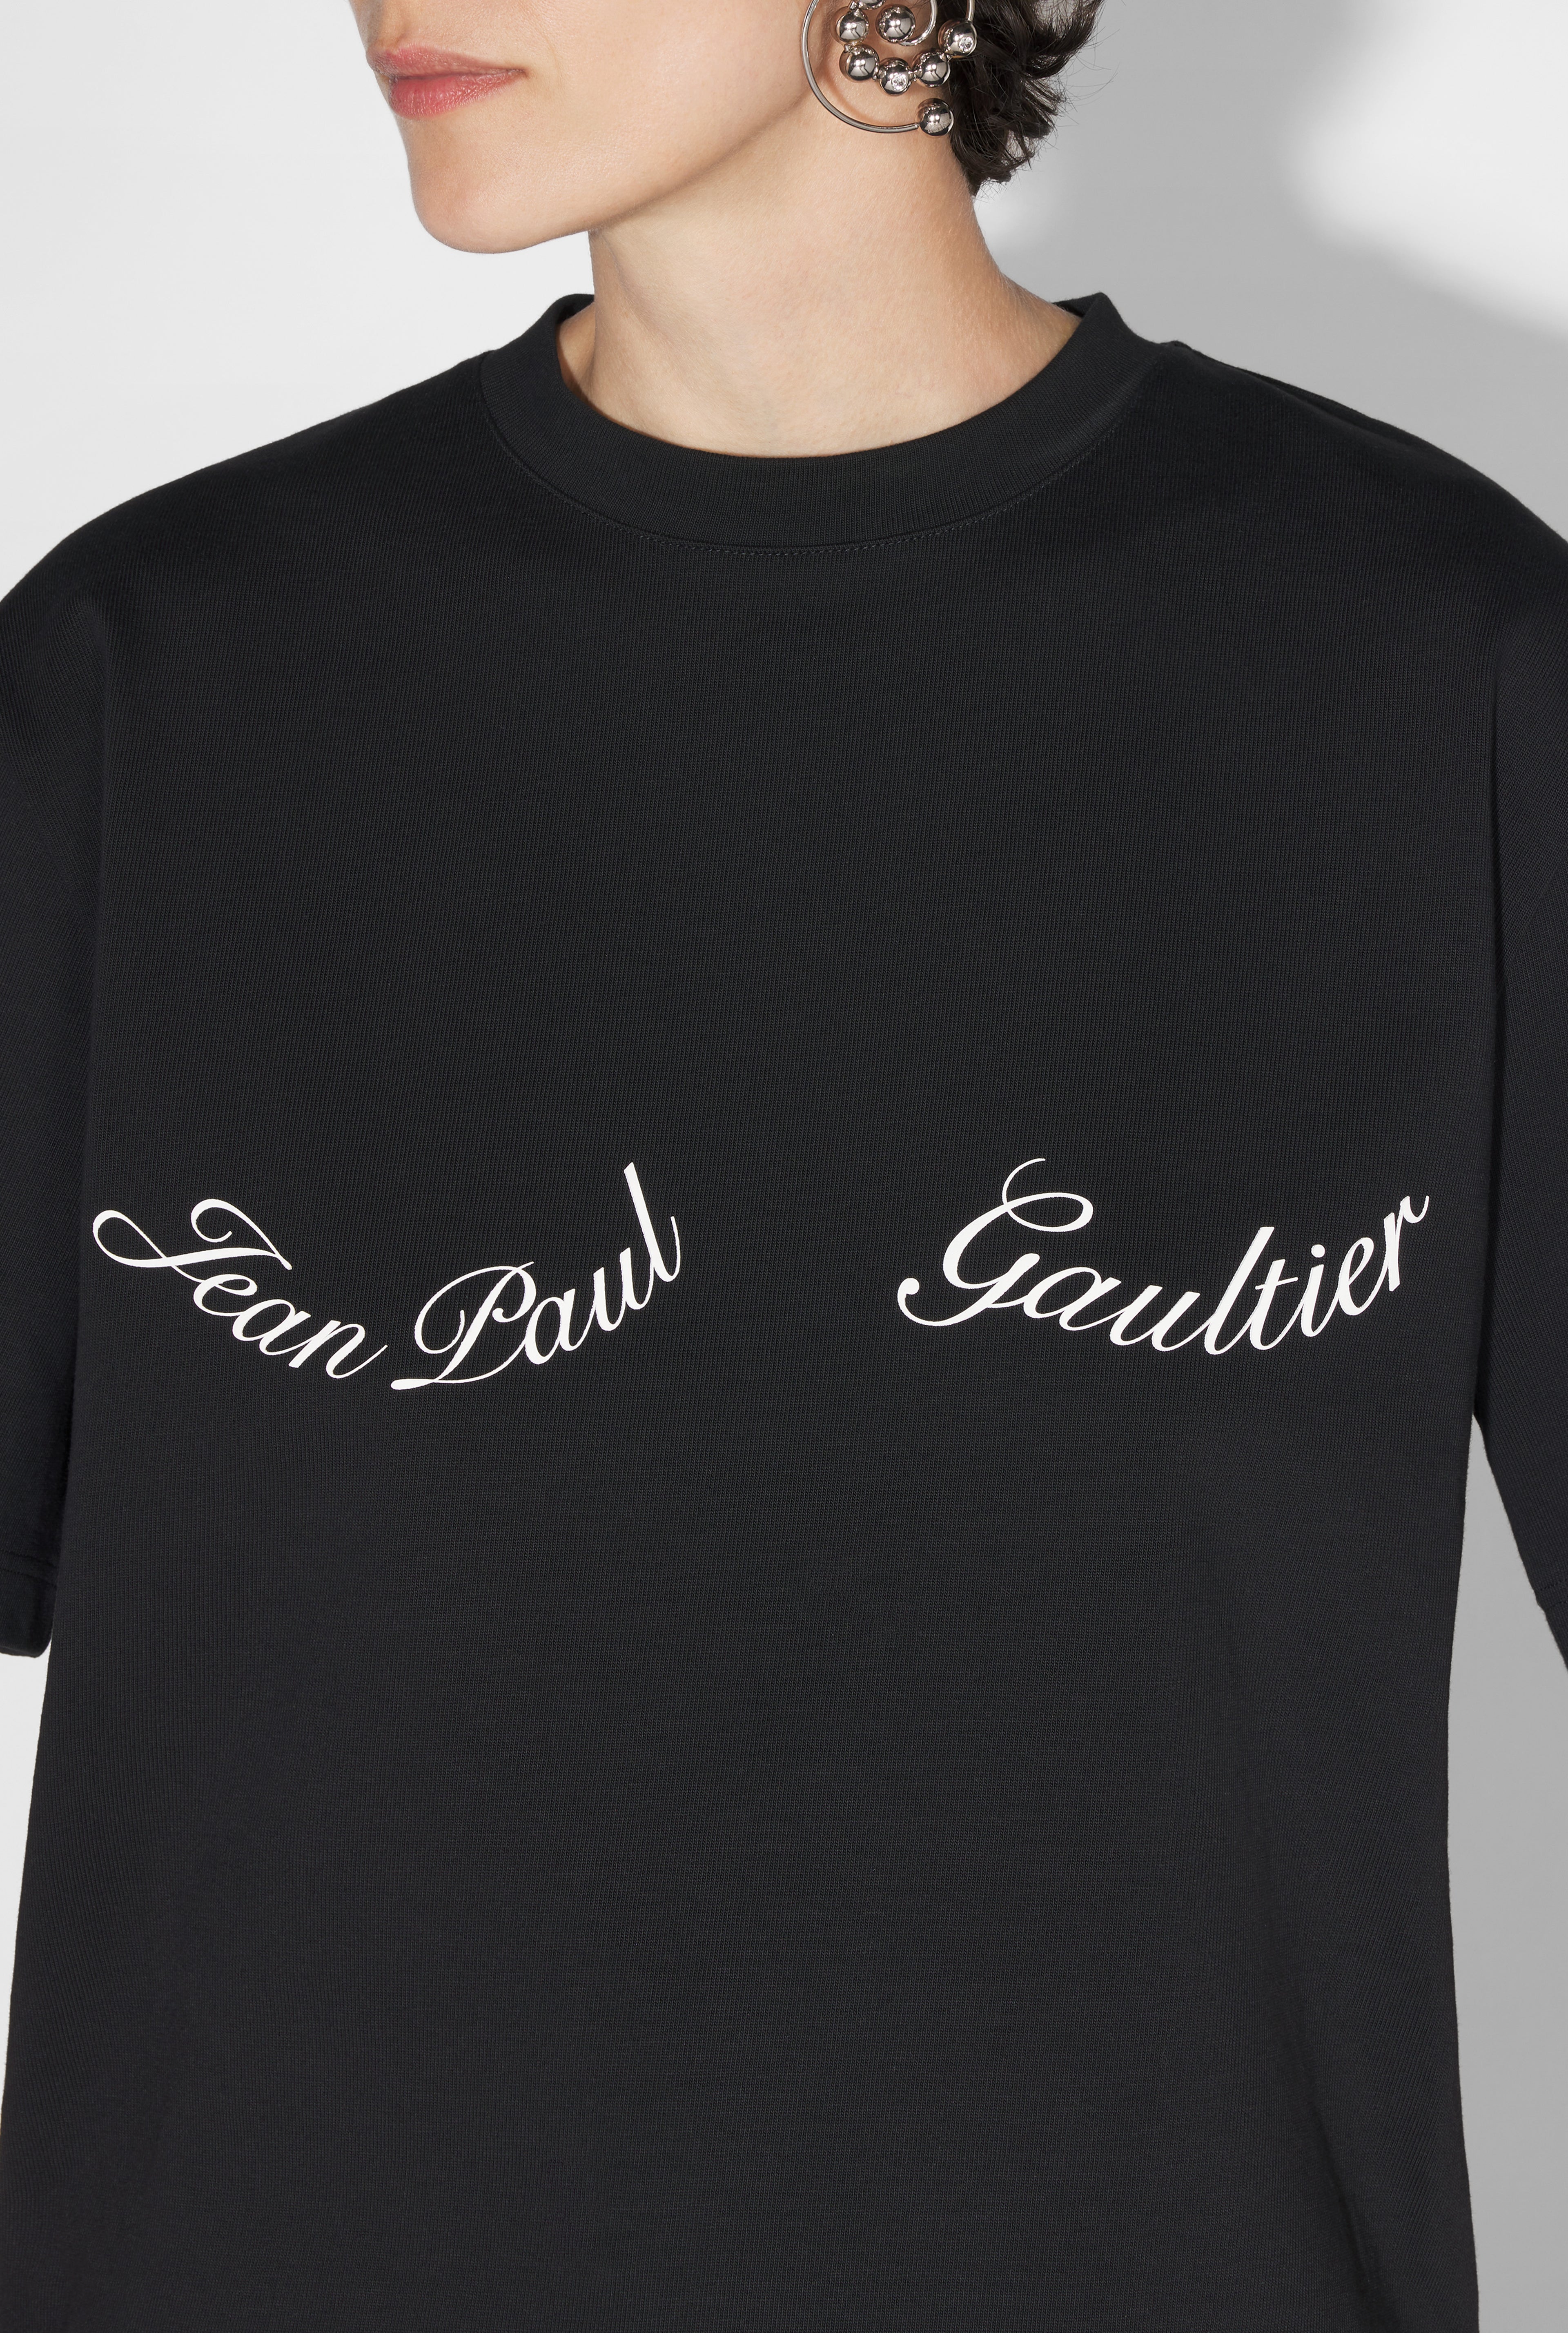 The Large Black Jean Paul Gaultier T-Shirt